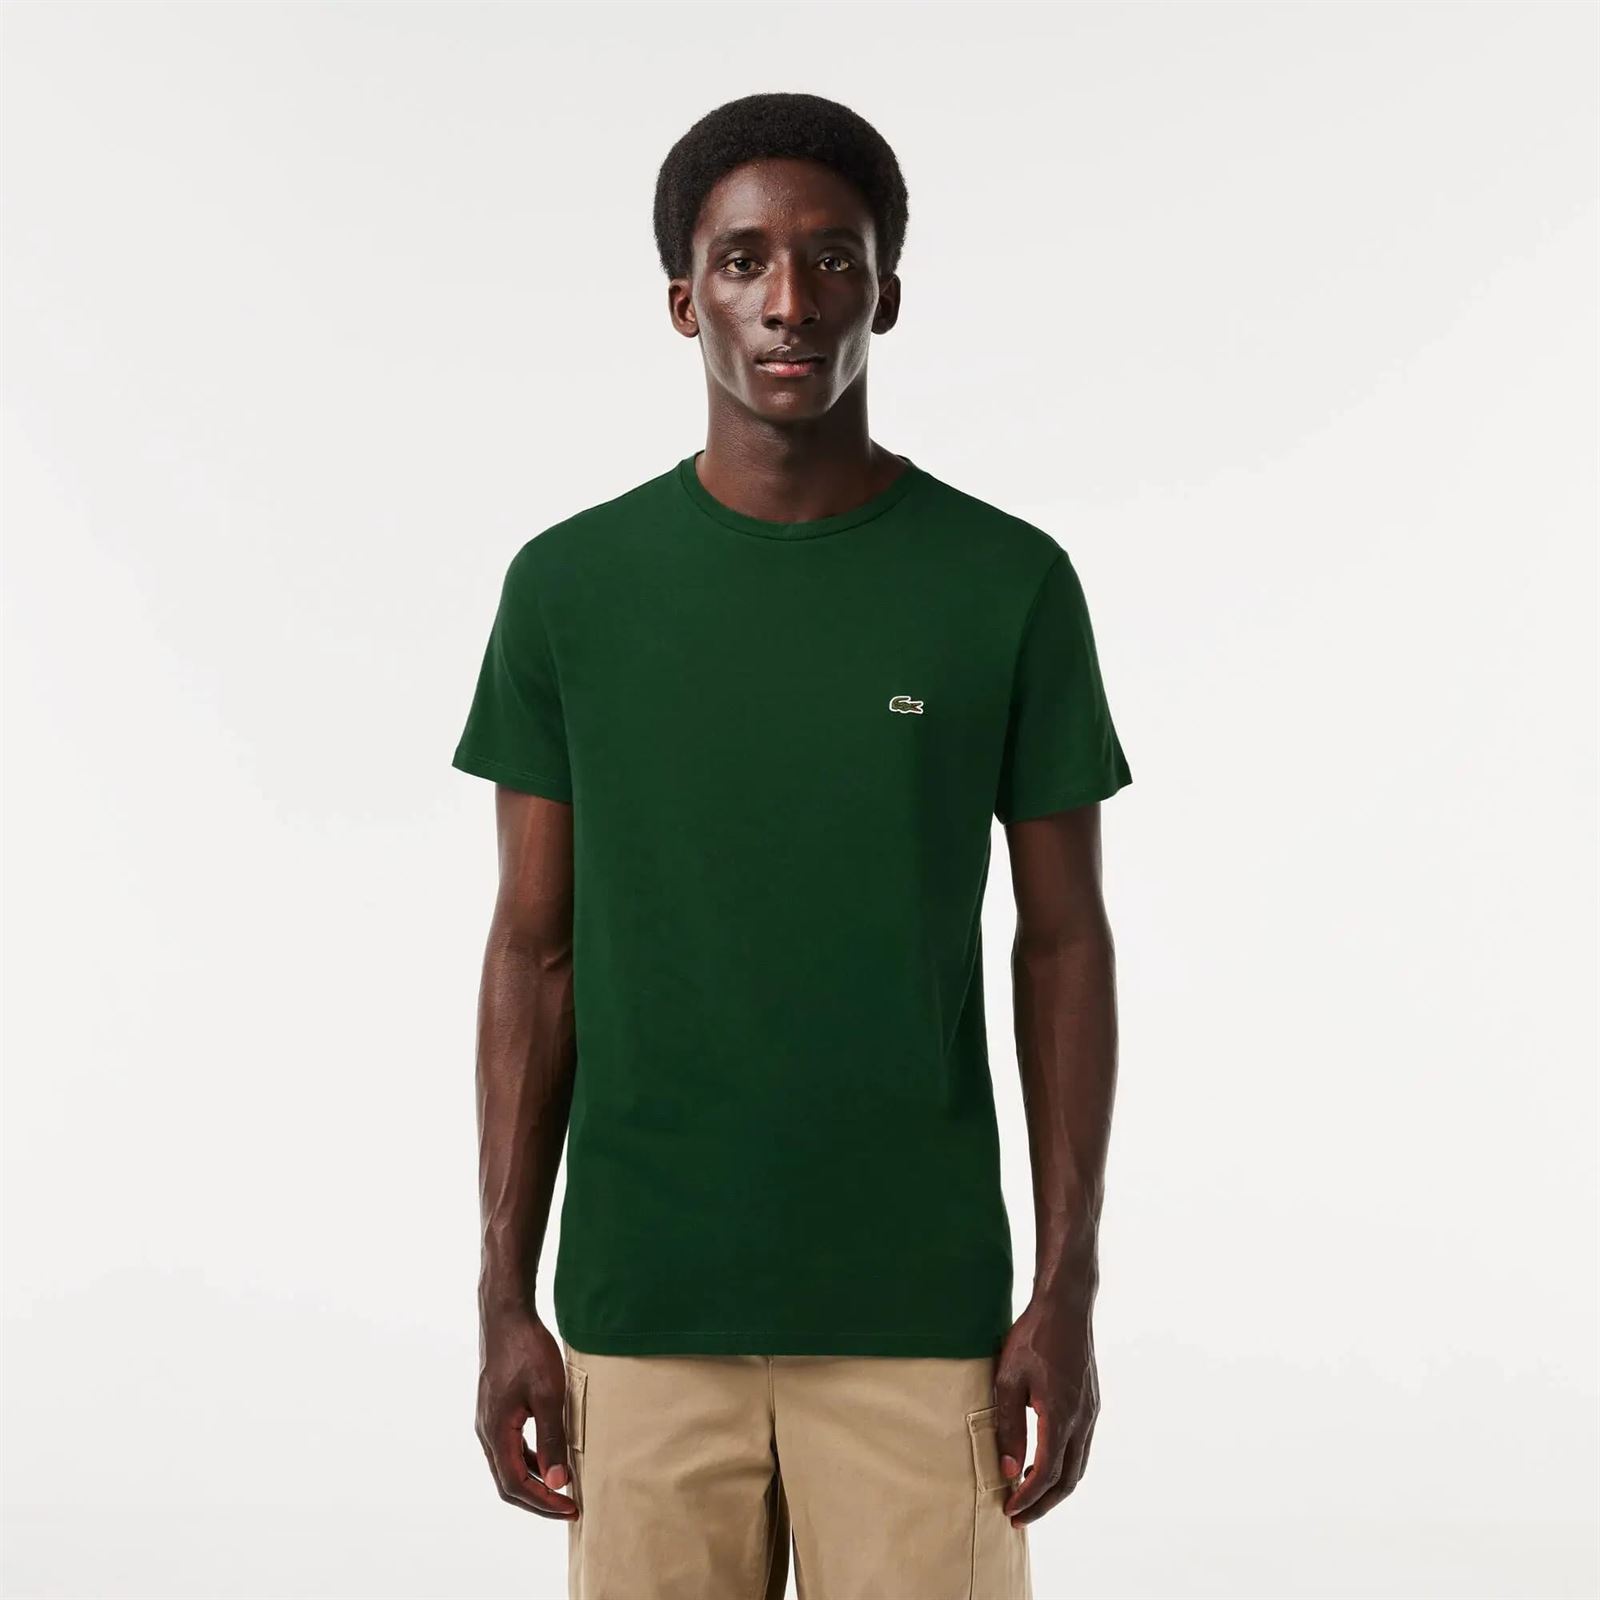 Camiseta Lacoste TH6709 00 132 vert - Imagen 1